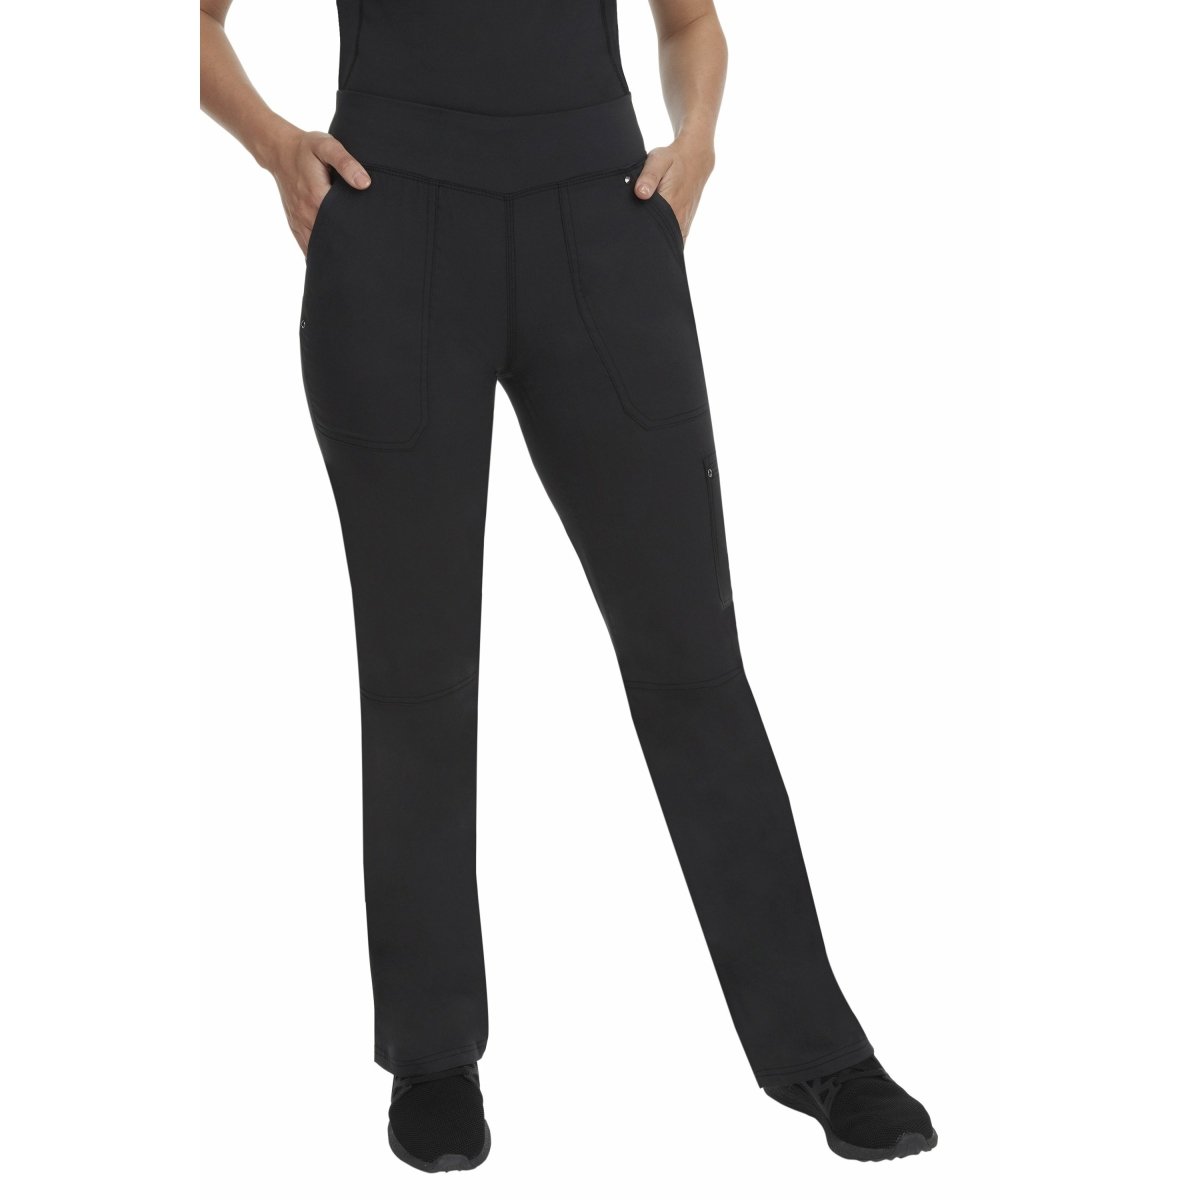 Carbon Women's Yoga Waistband Excel Pants 985 - The Nursing Store Inc.